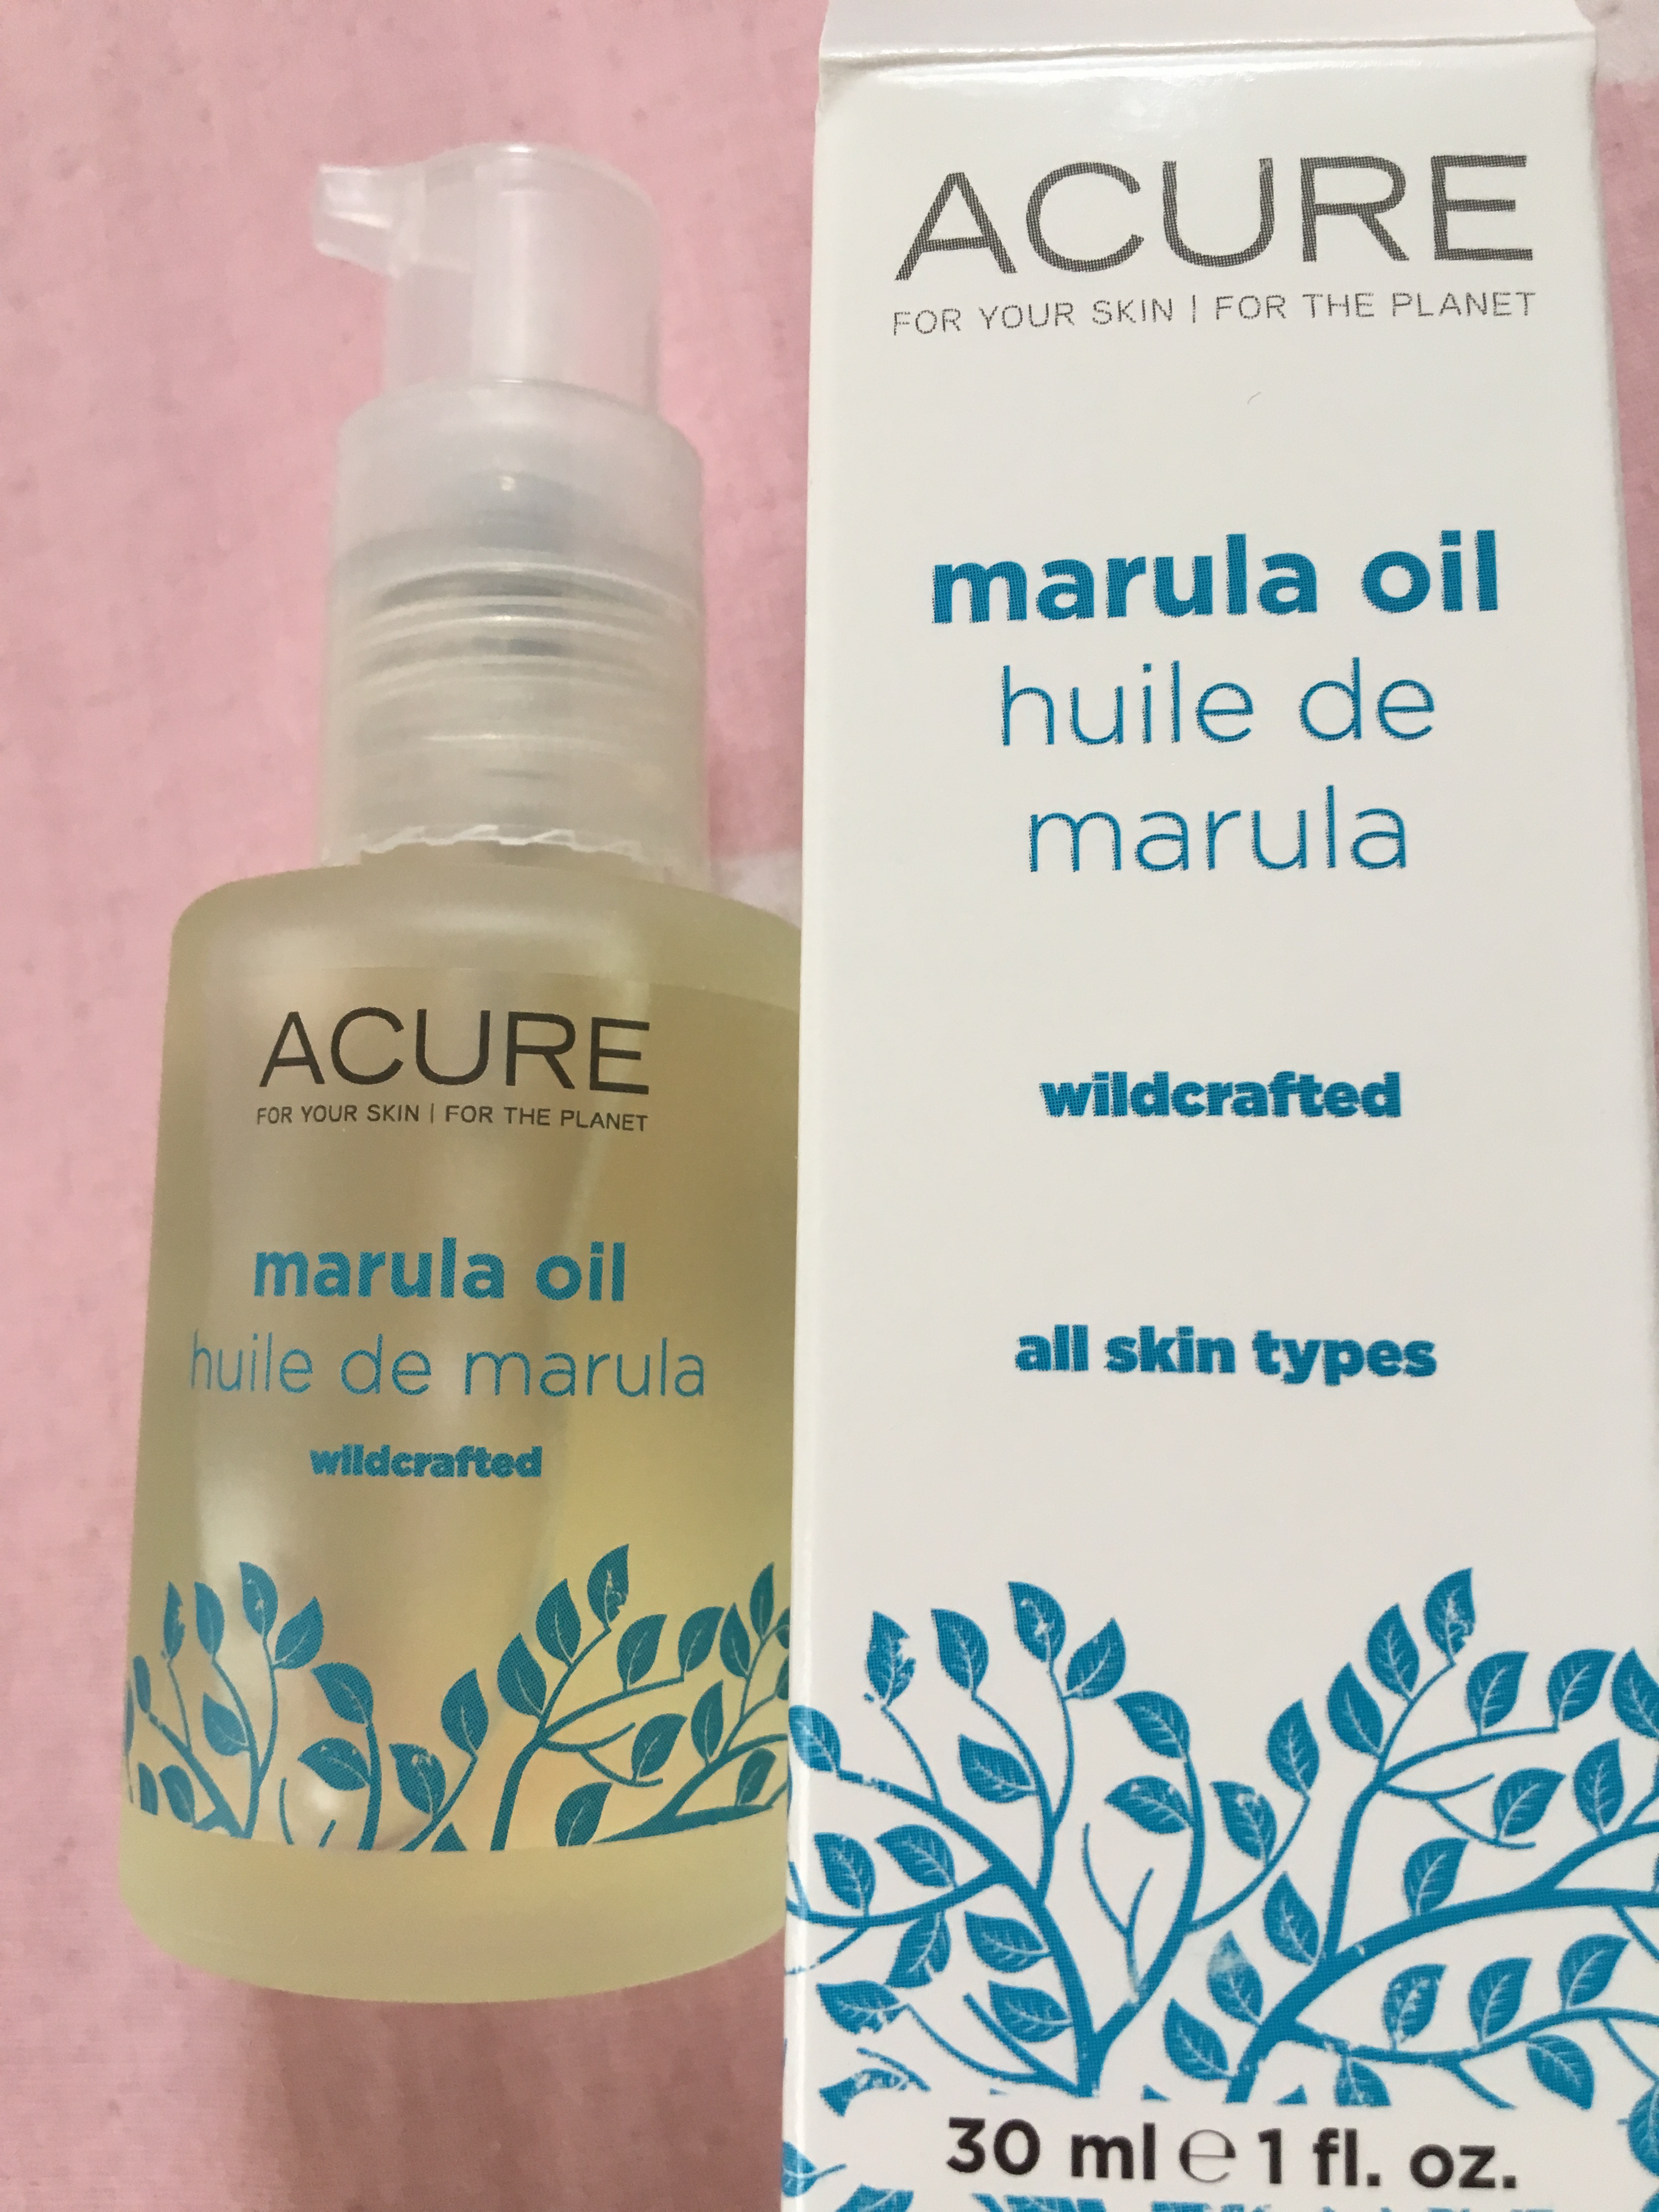 Acure Organics The Essentials Marula Oils Huile De Marula マルーラオイルでスベスベ Mind You